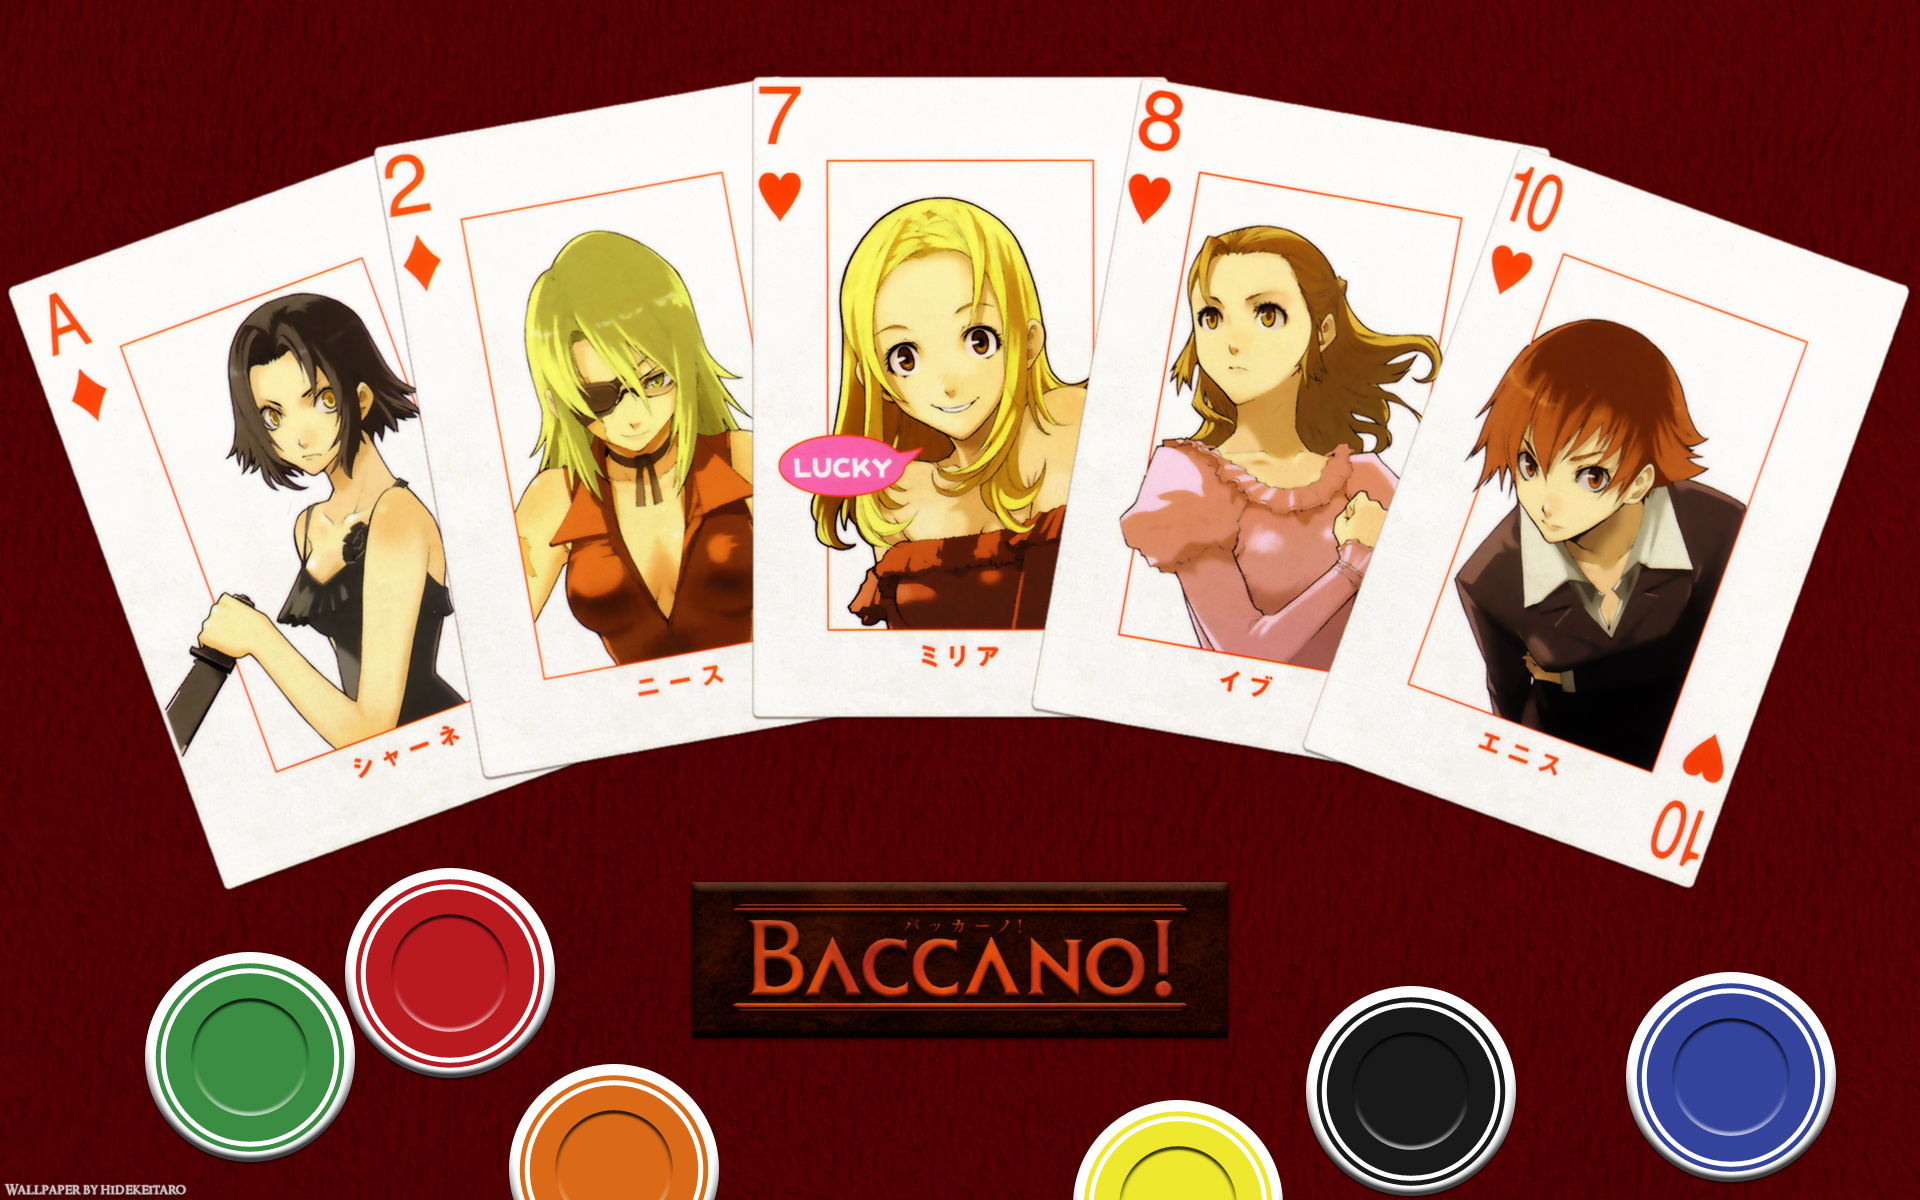 Baccano!, anime - desktop wallpaper